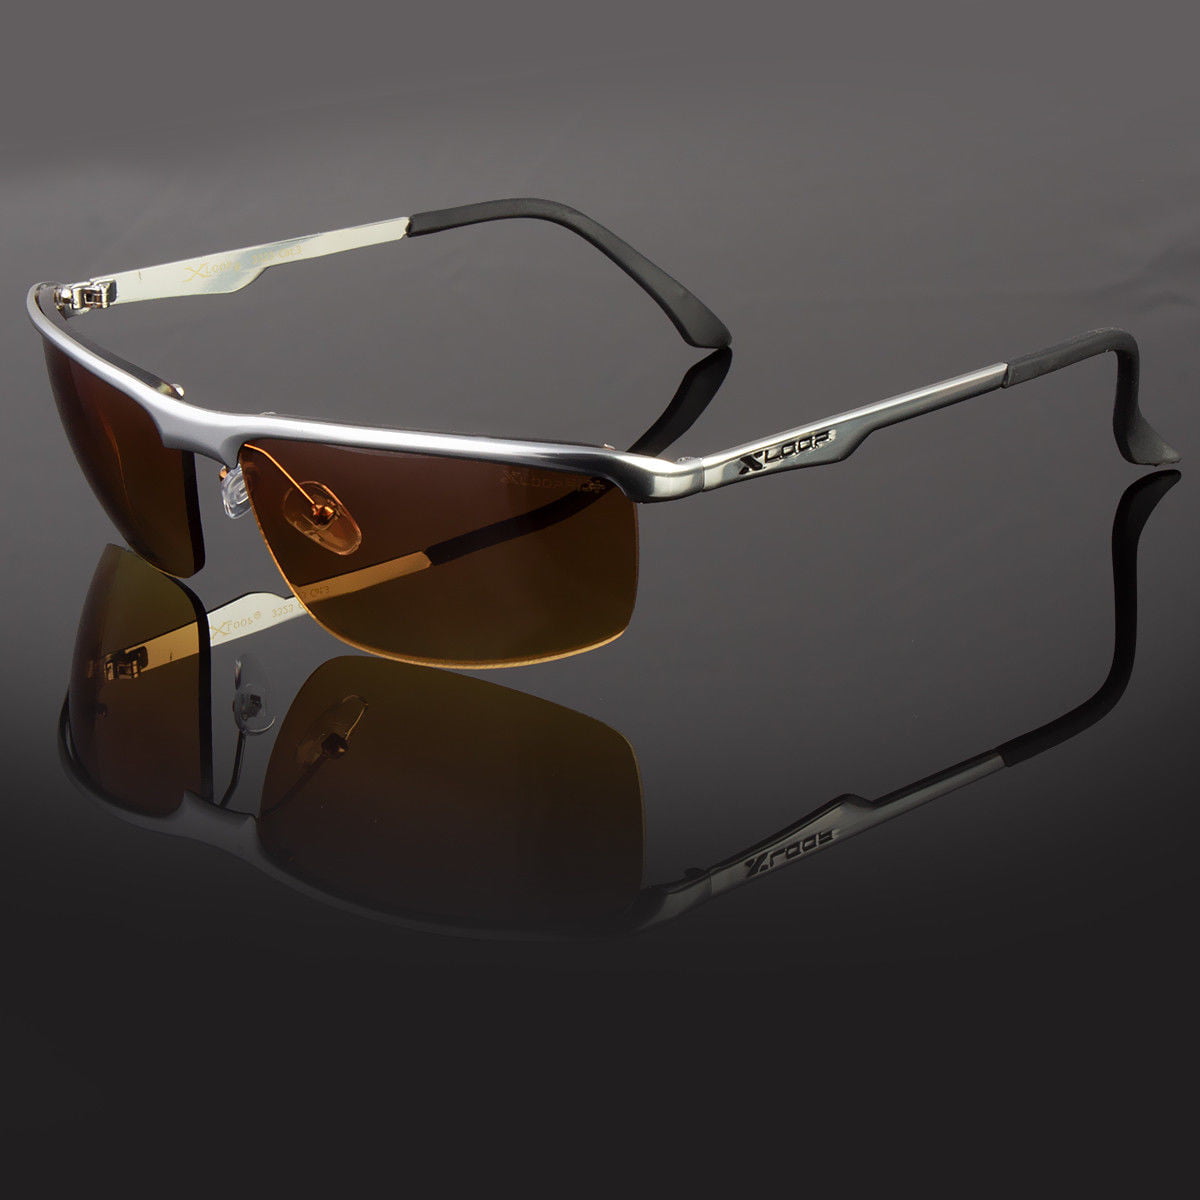 HD High Definition Vision Driving Sunglasses WrapAround Amber Lens Glasses Black 